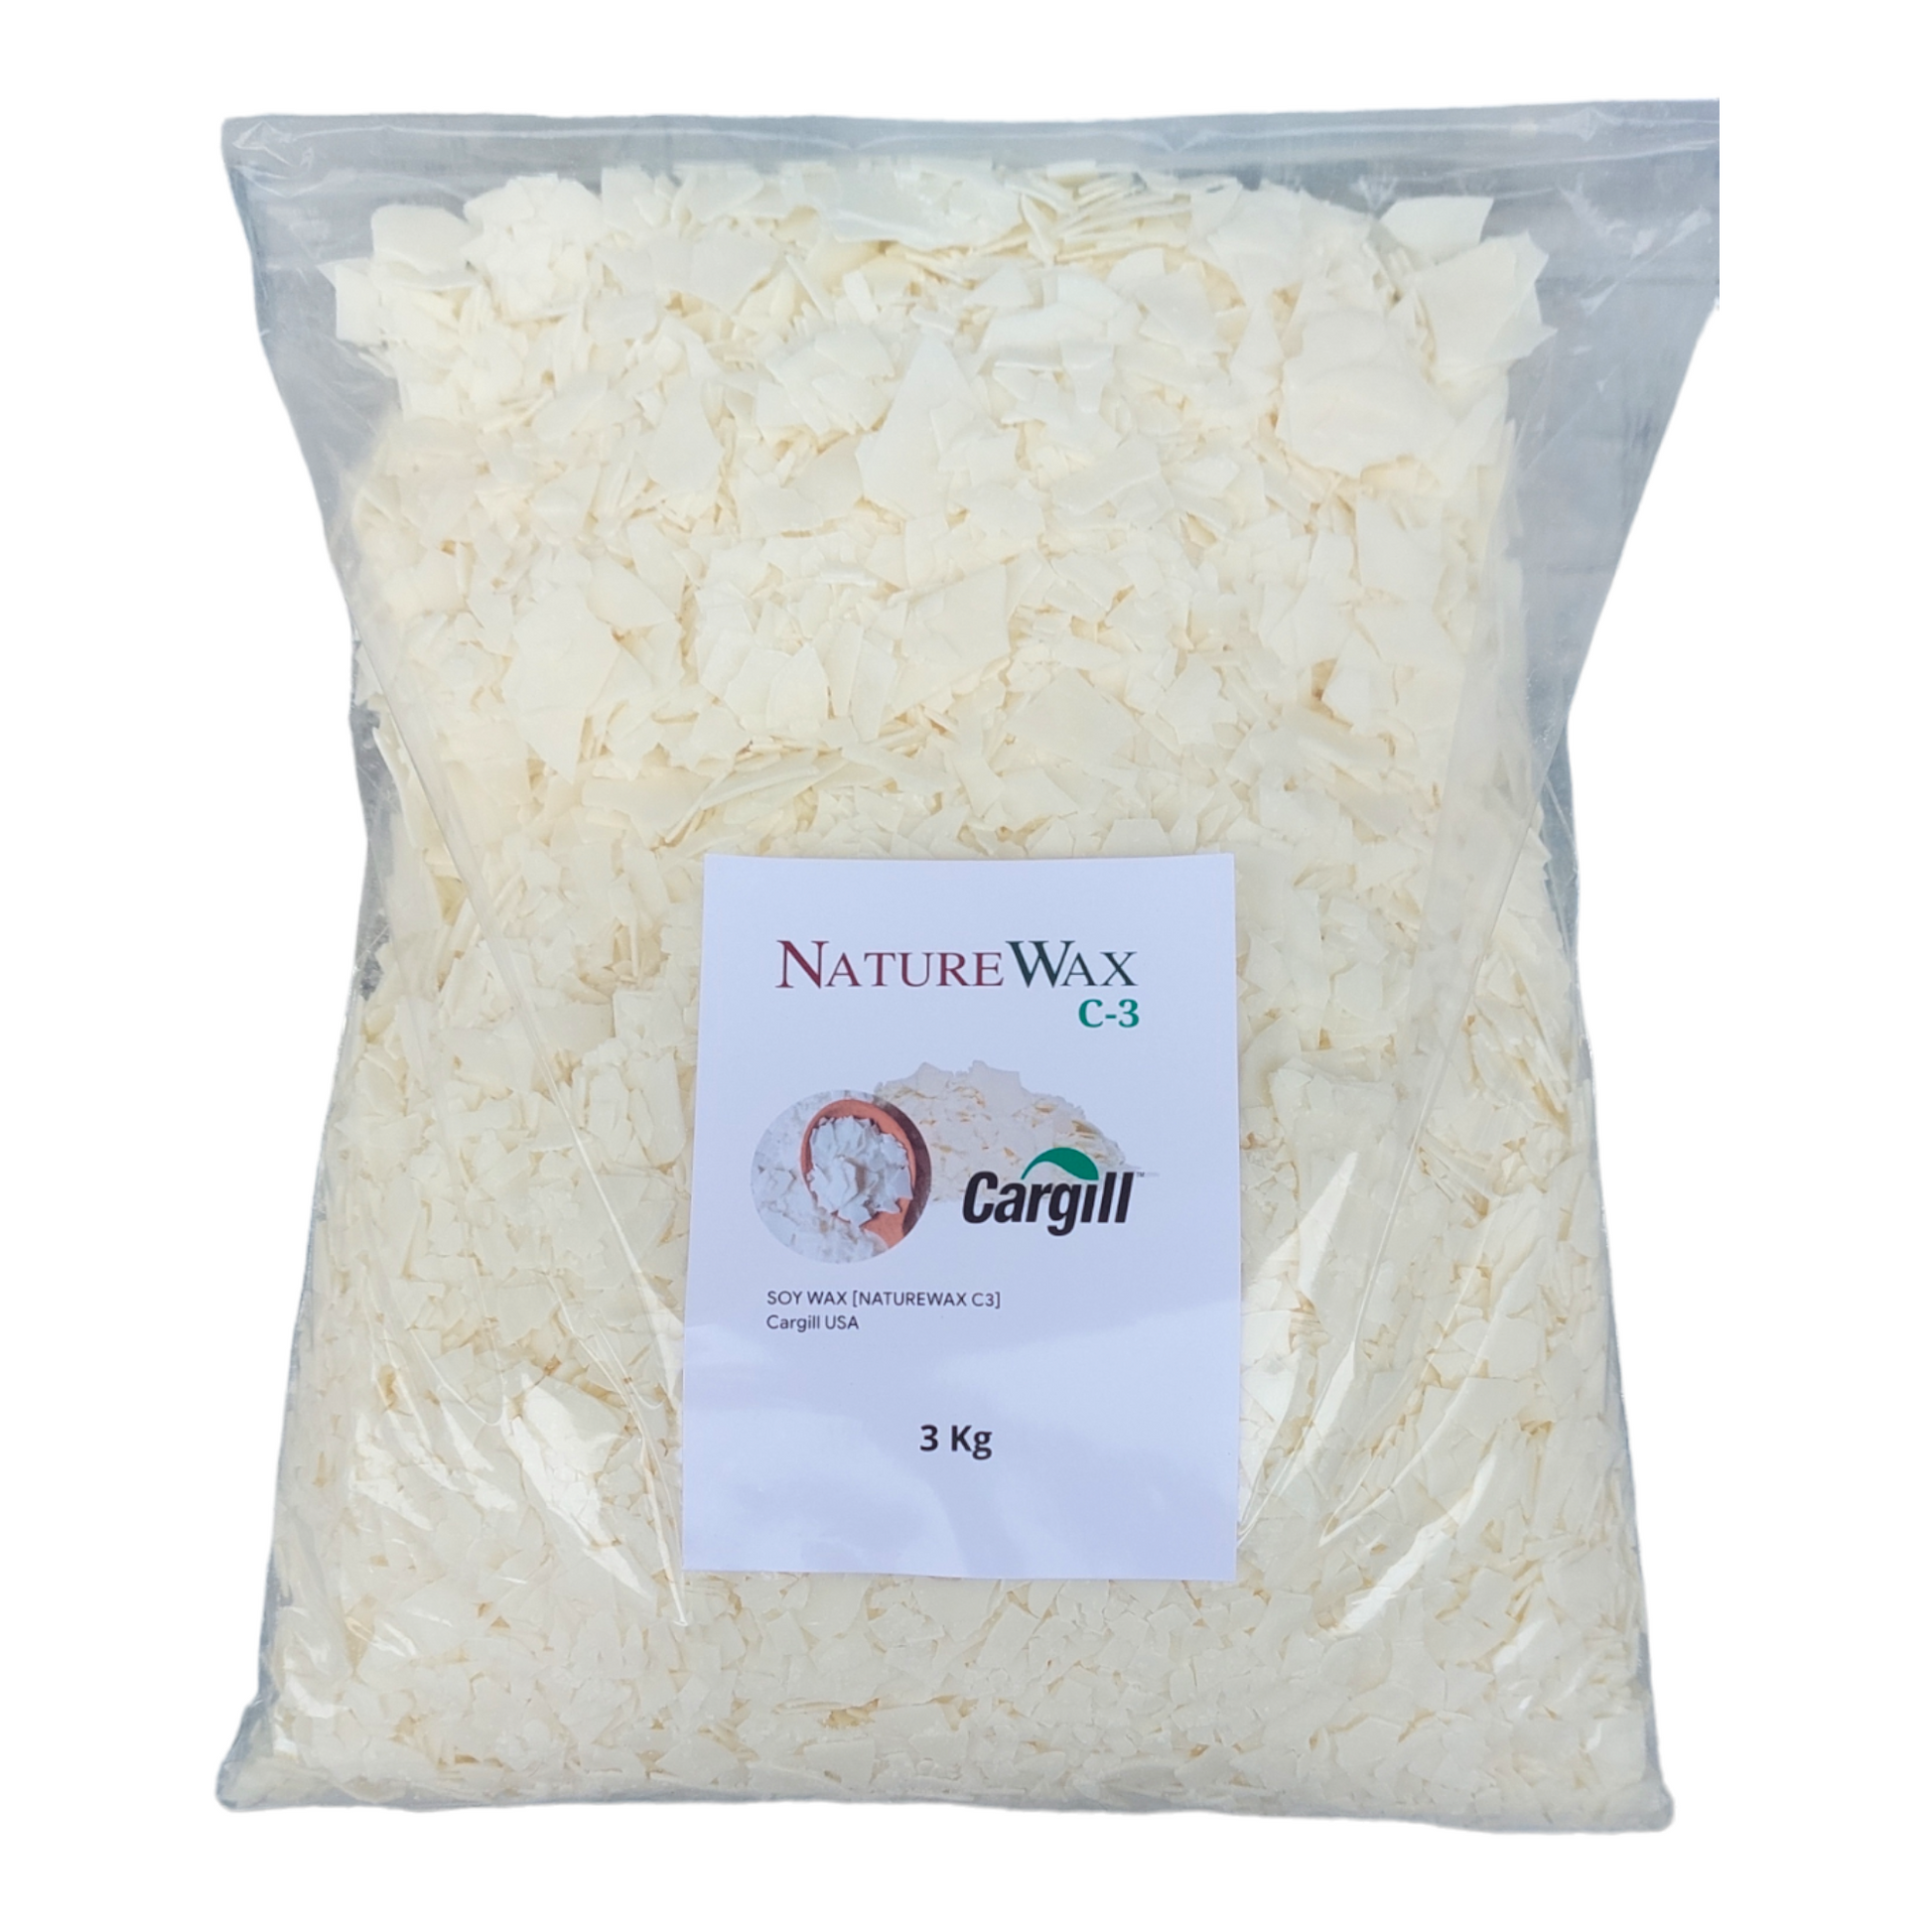 Cera di soia naturale in vendita a caldo per la produzione di candele -  Cina Frappè di lino di soia e cera di soia prezzo